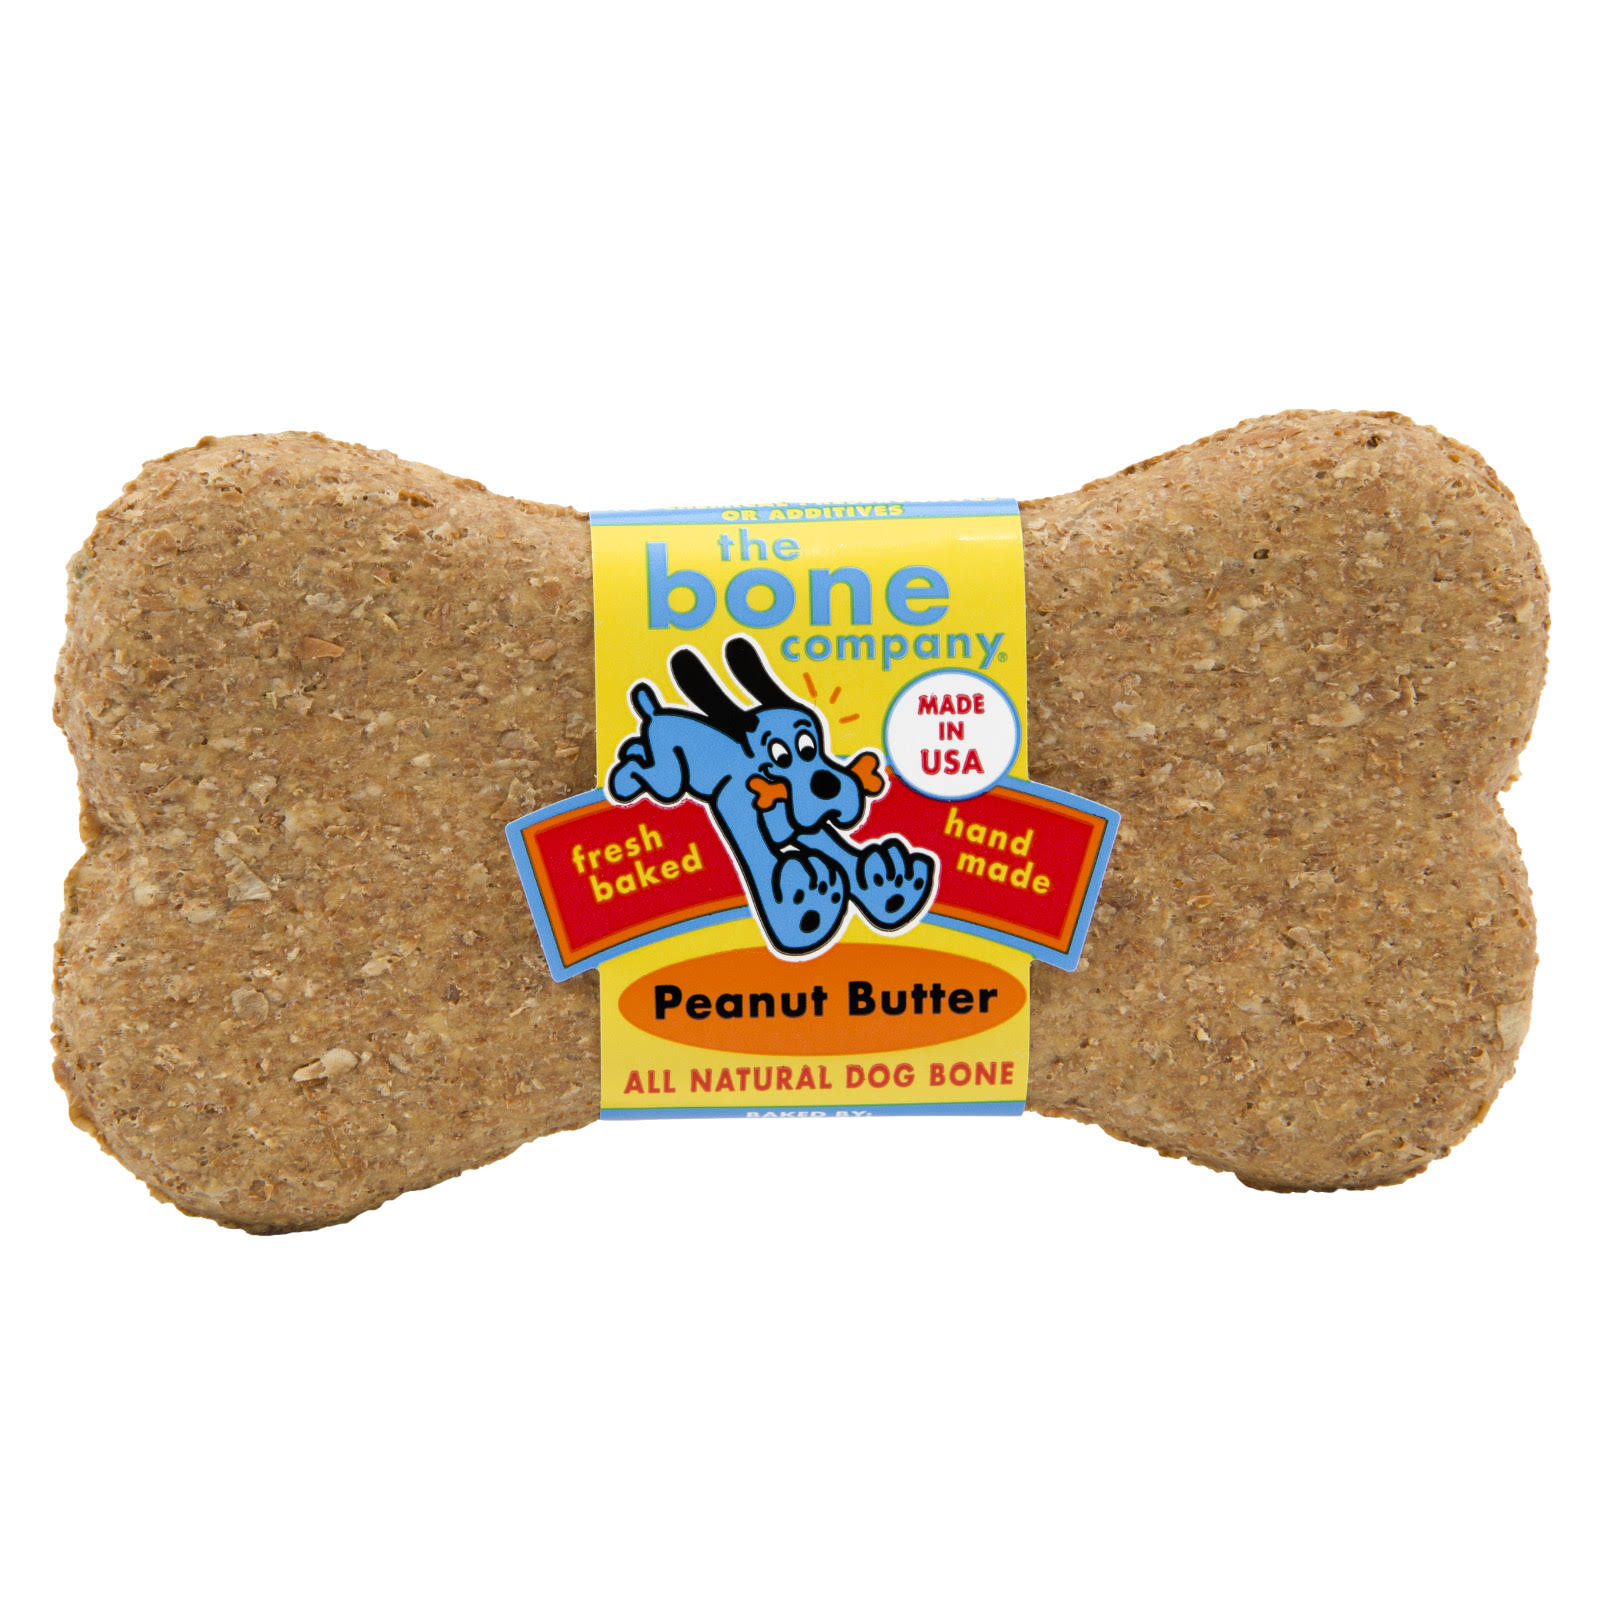 Natures Animals Gourmet Dog Bones - Peanut Butter, 1.6oz